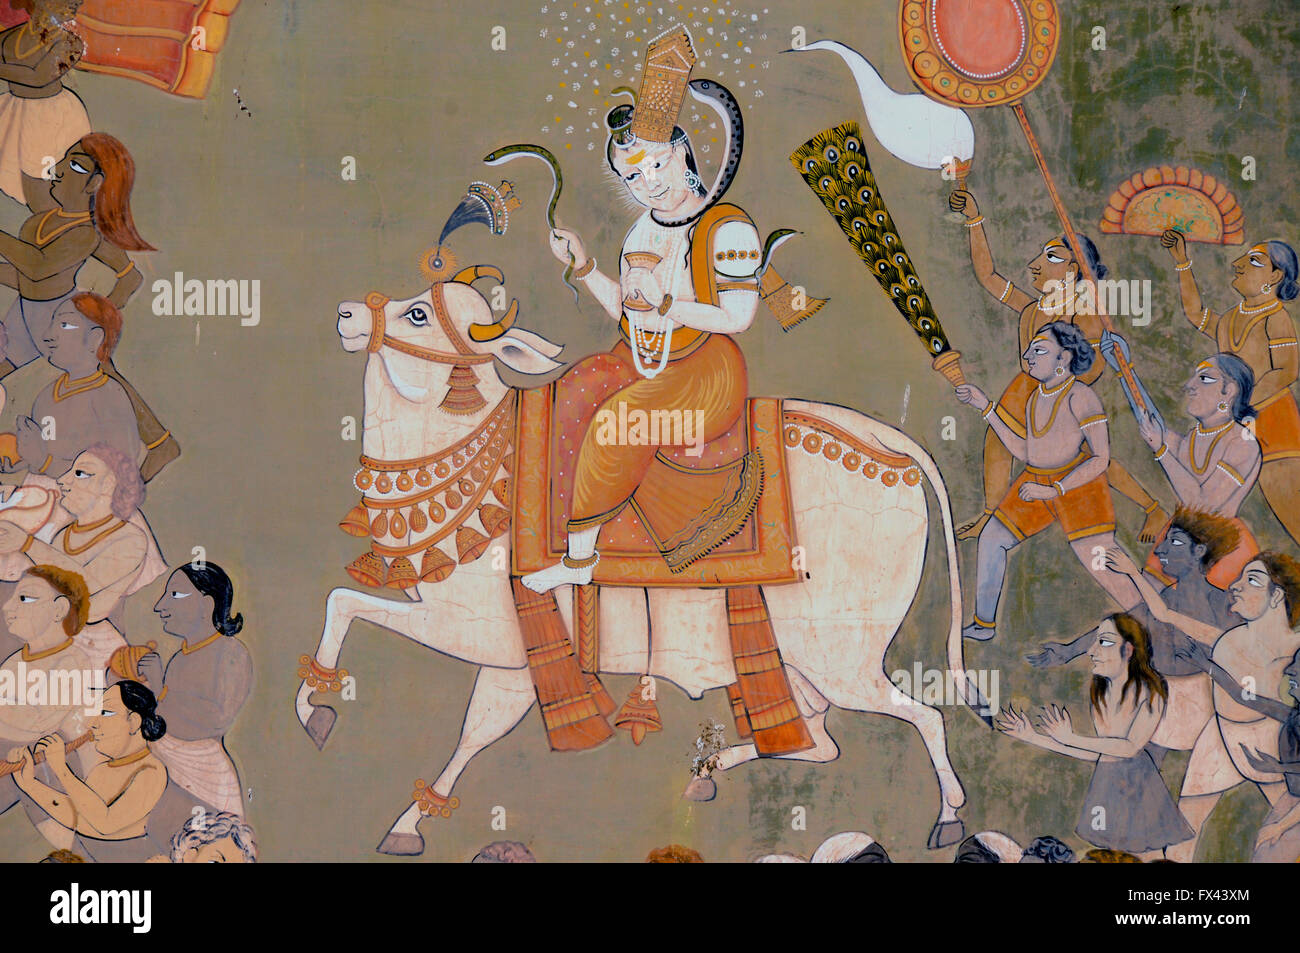 Detail from a wall decorative painting at Meterangarth Fort, Jodhpur, Rajasthan, India. Stock Photo